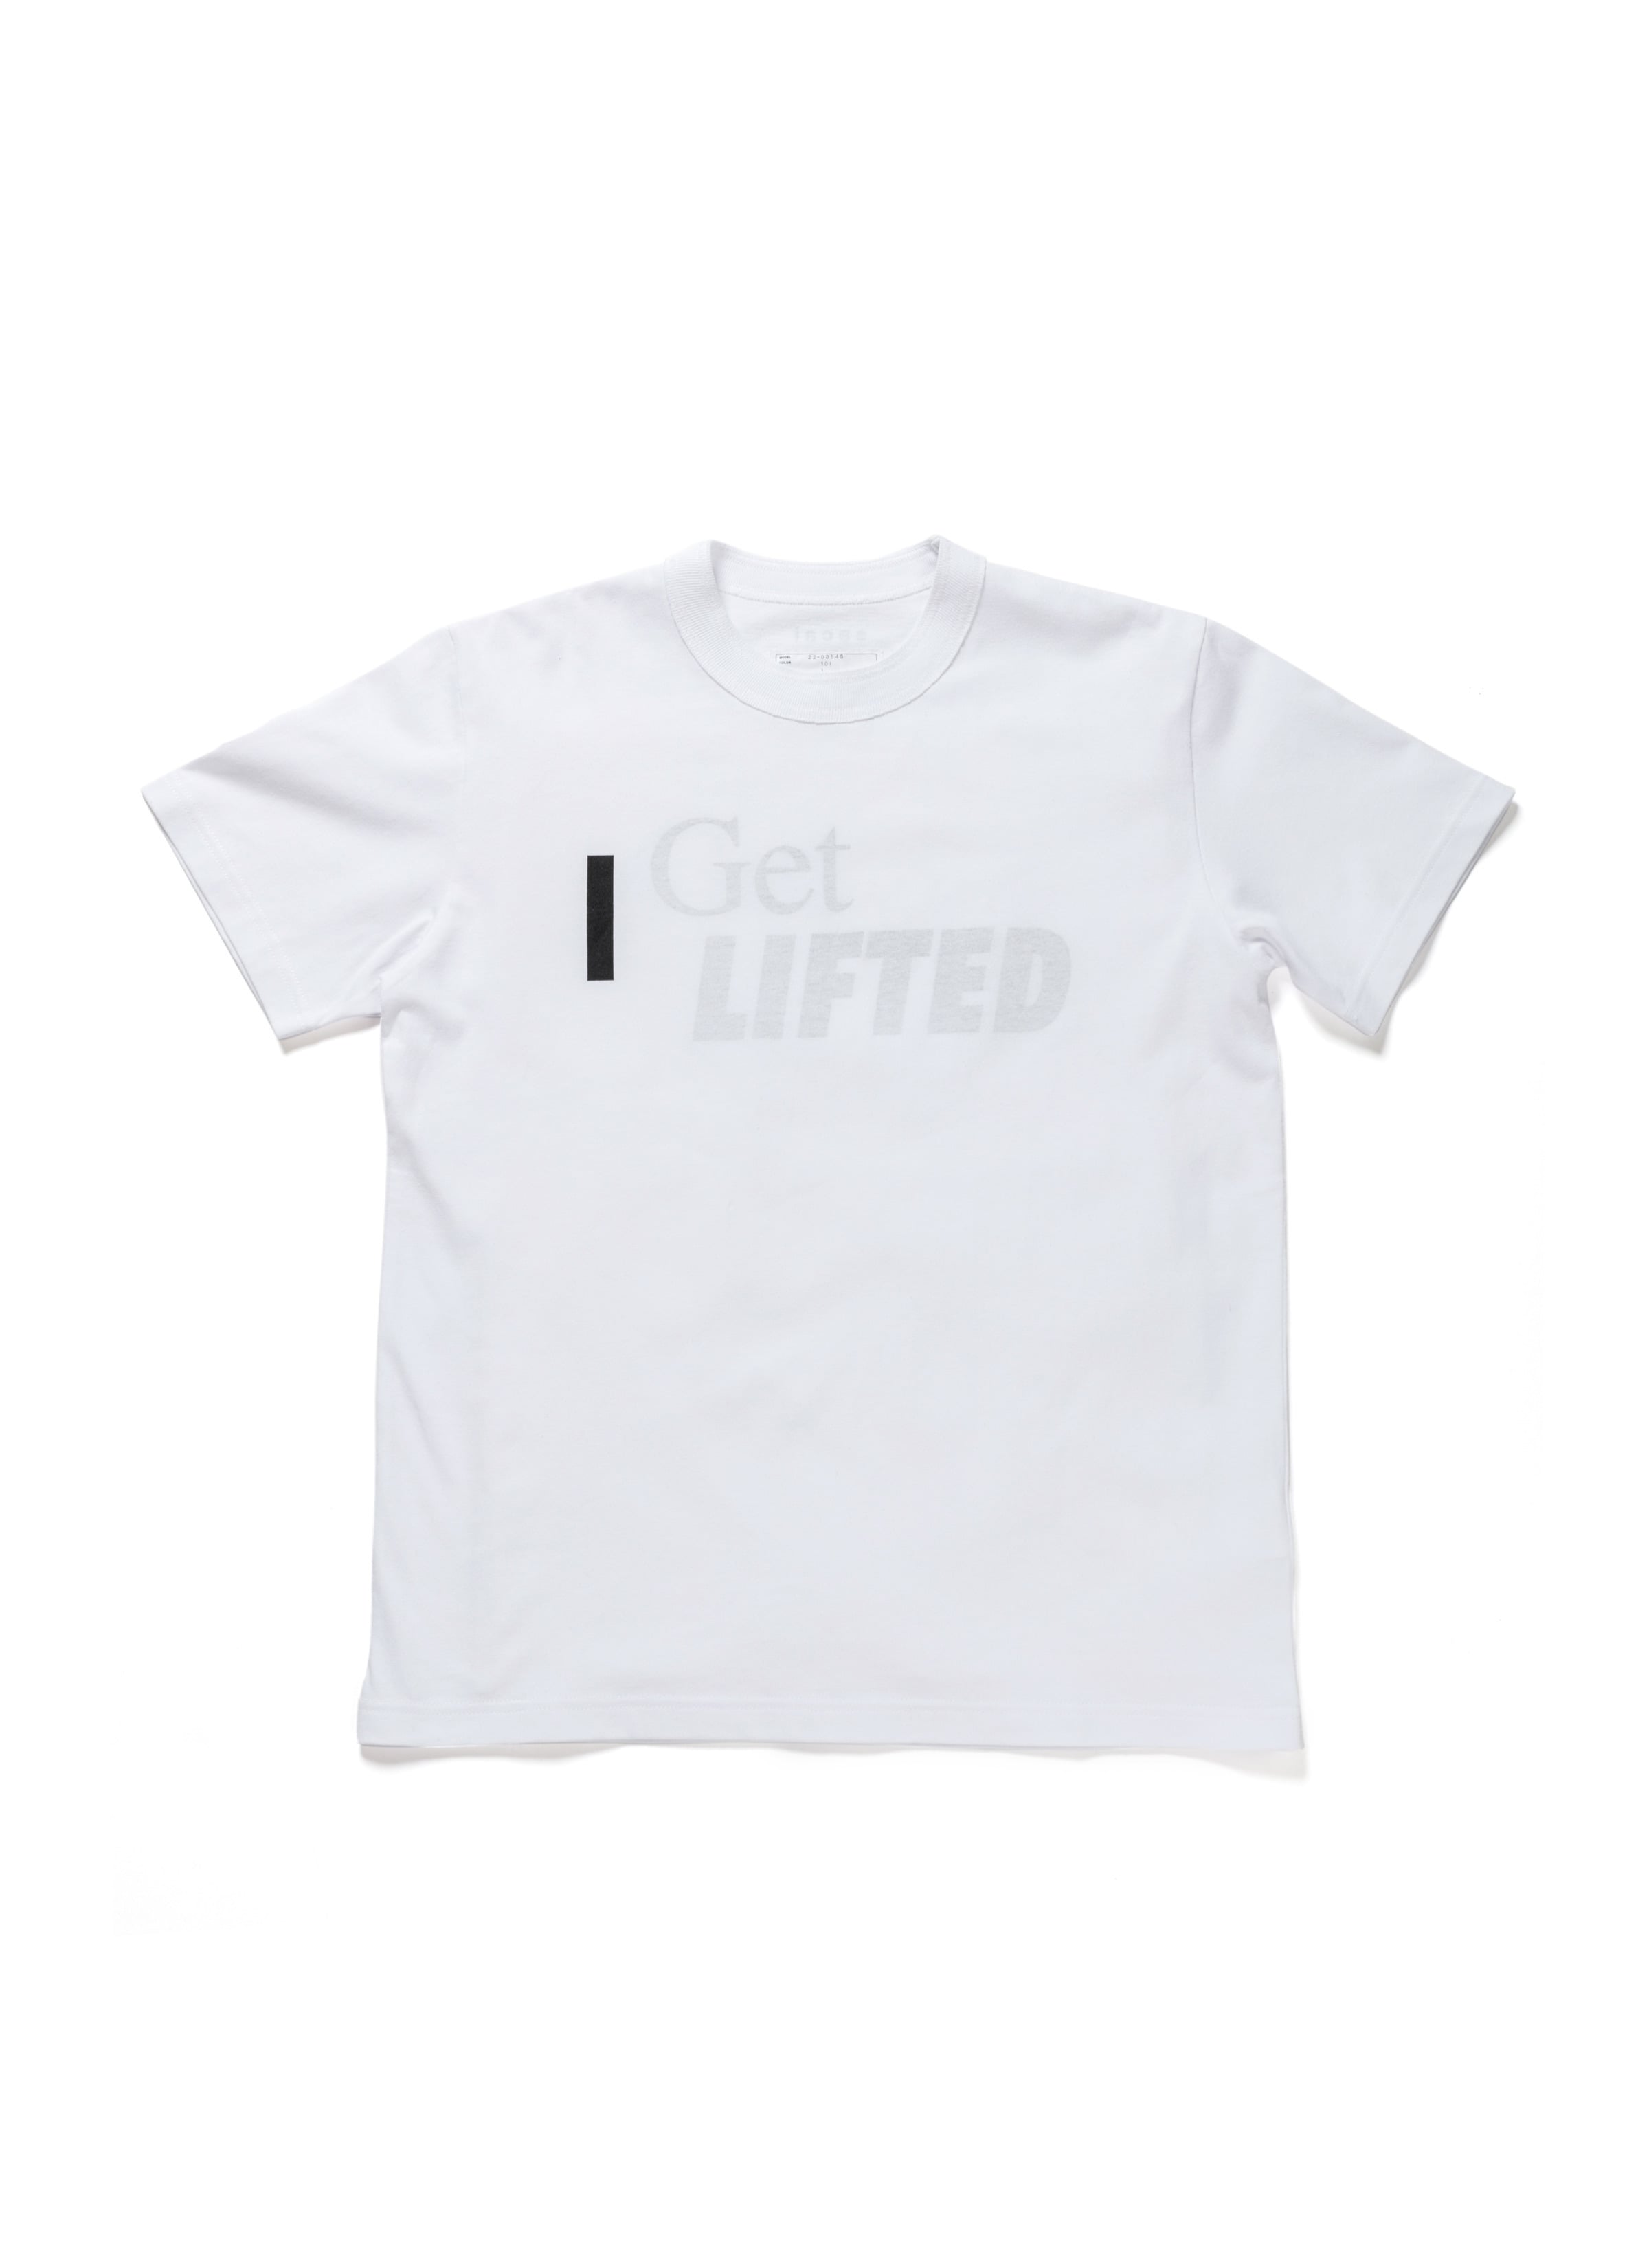 I Get LIFTED T-Shirt 詳細画像 WHITE 1